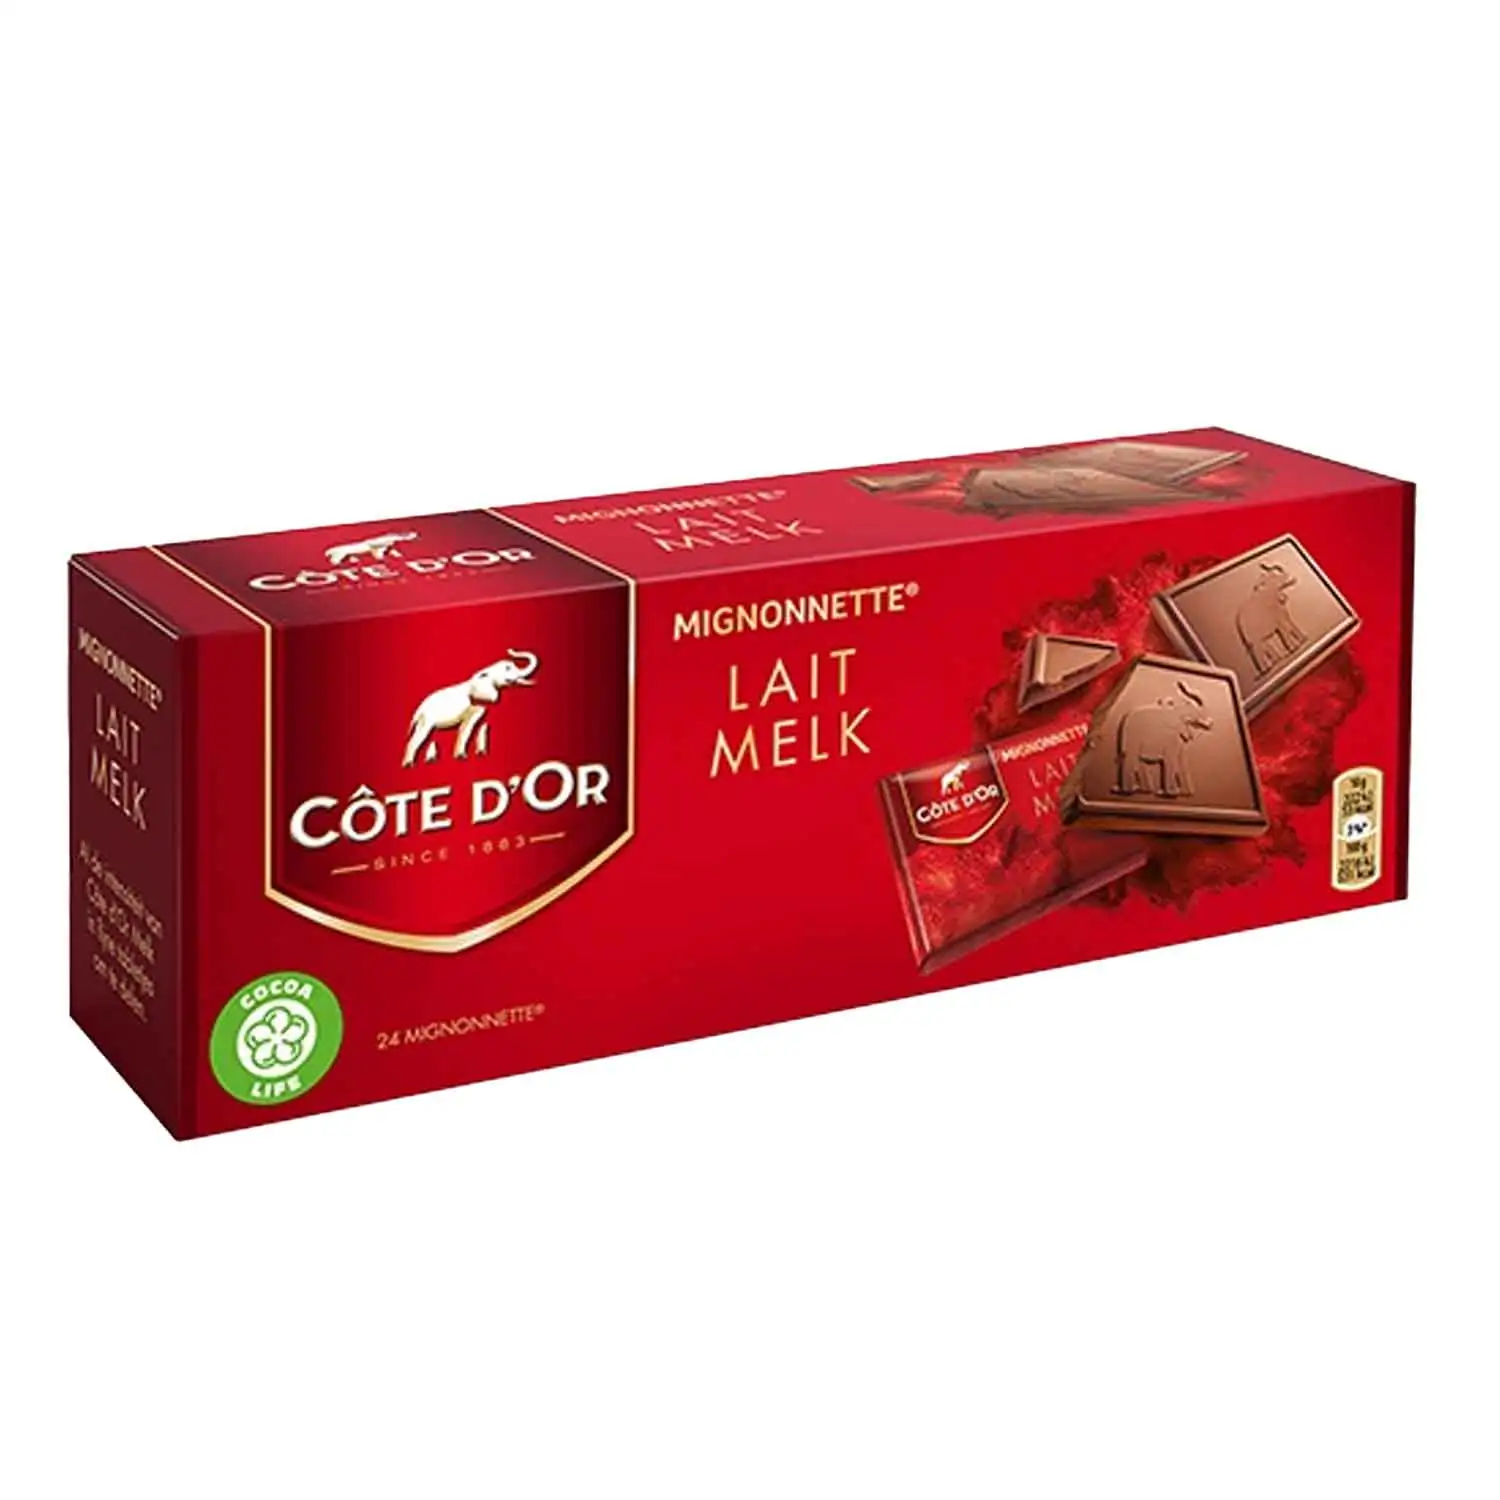 CDO mign lait 24x10g - Buy at Real Tobacco